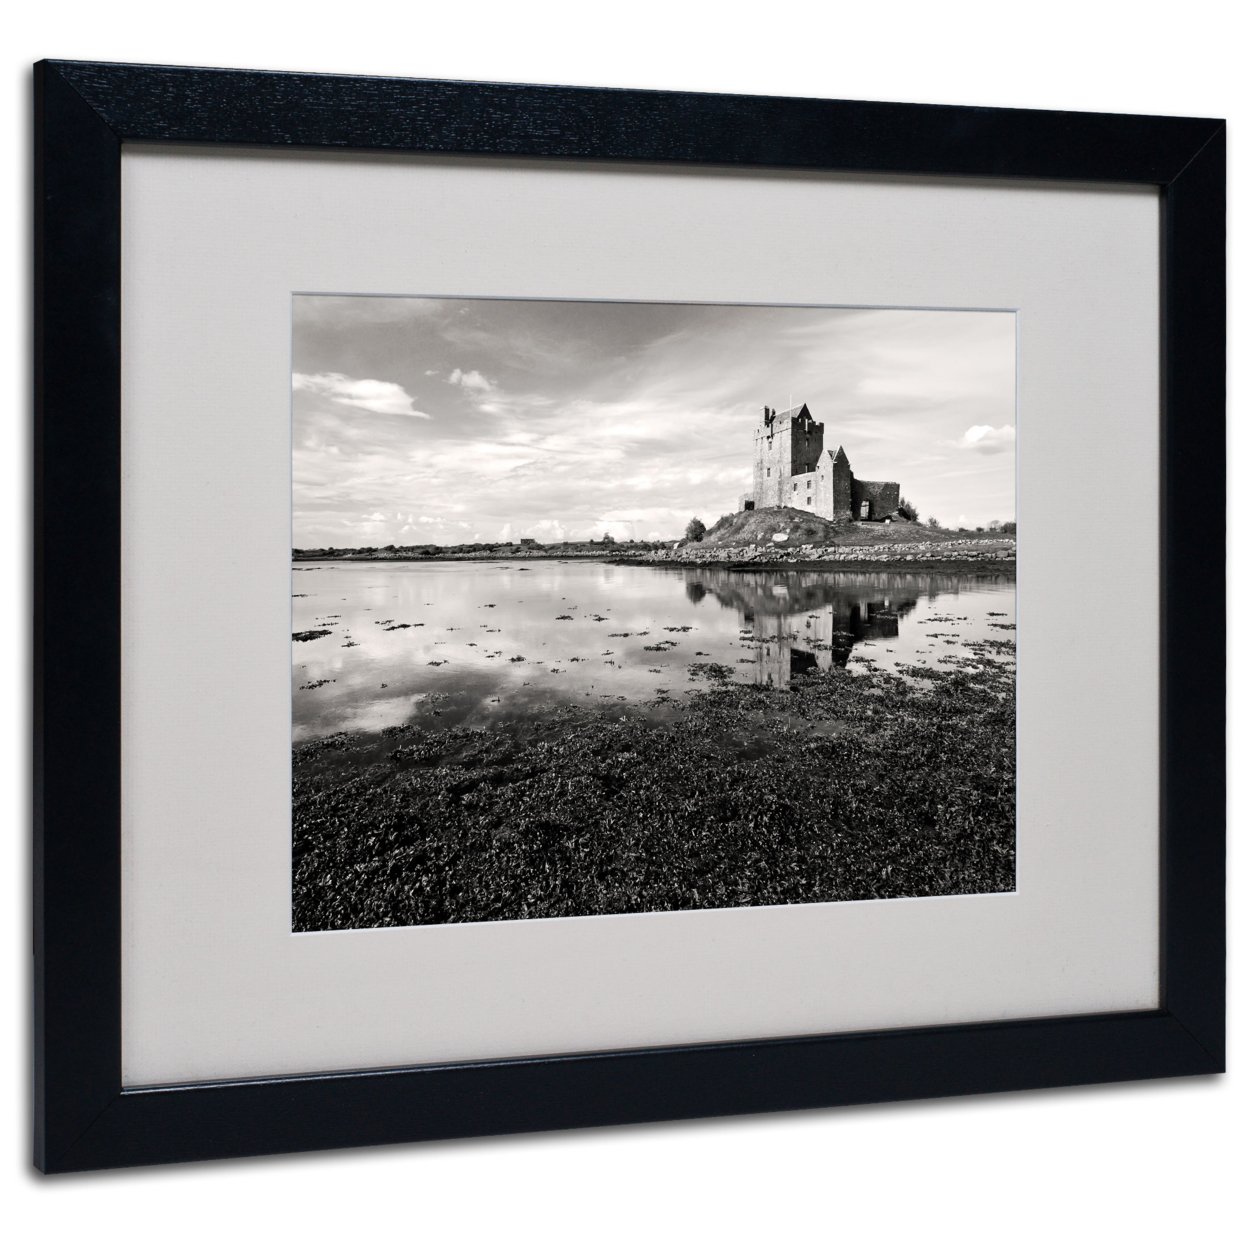 Pierre Leclerc 'Irish Castle' Black Wooden Framed Art 18 X 22 Inches